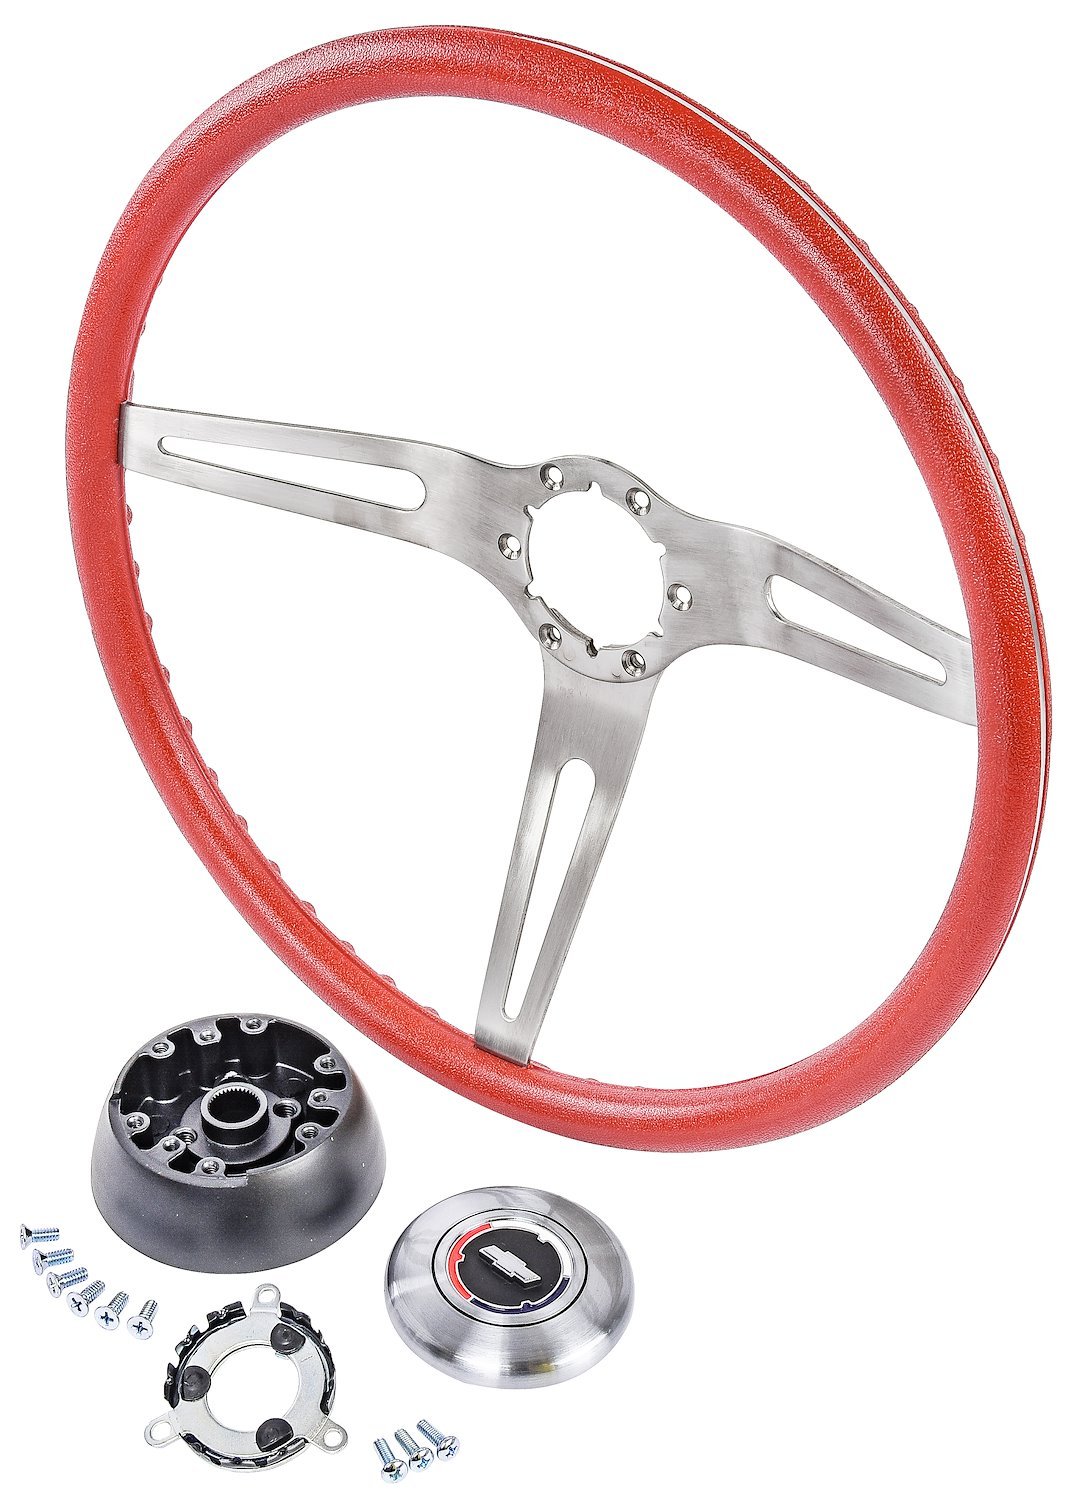 3-Spoke Comfort Grip Steering Wheel Kit Fits Select 1969-1972 Chevrolet Cars [Red Grip]